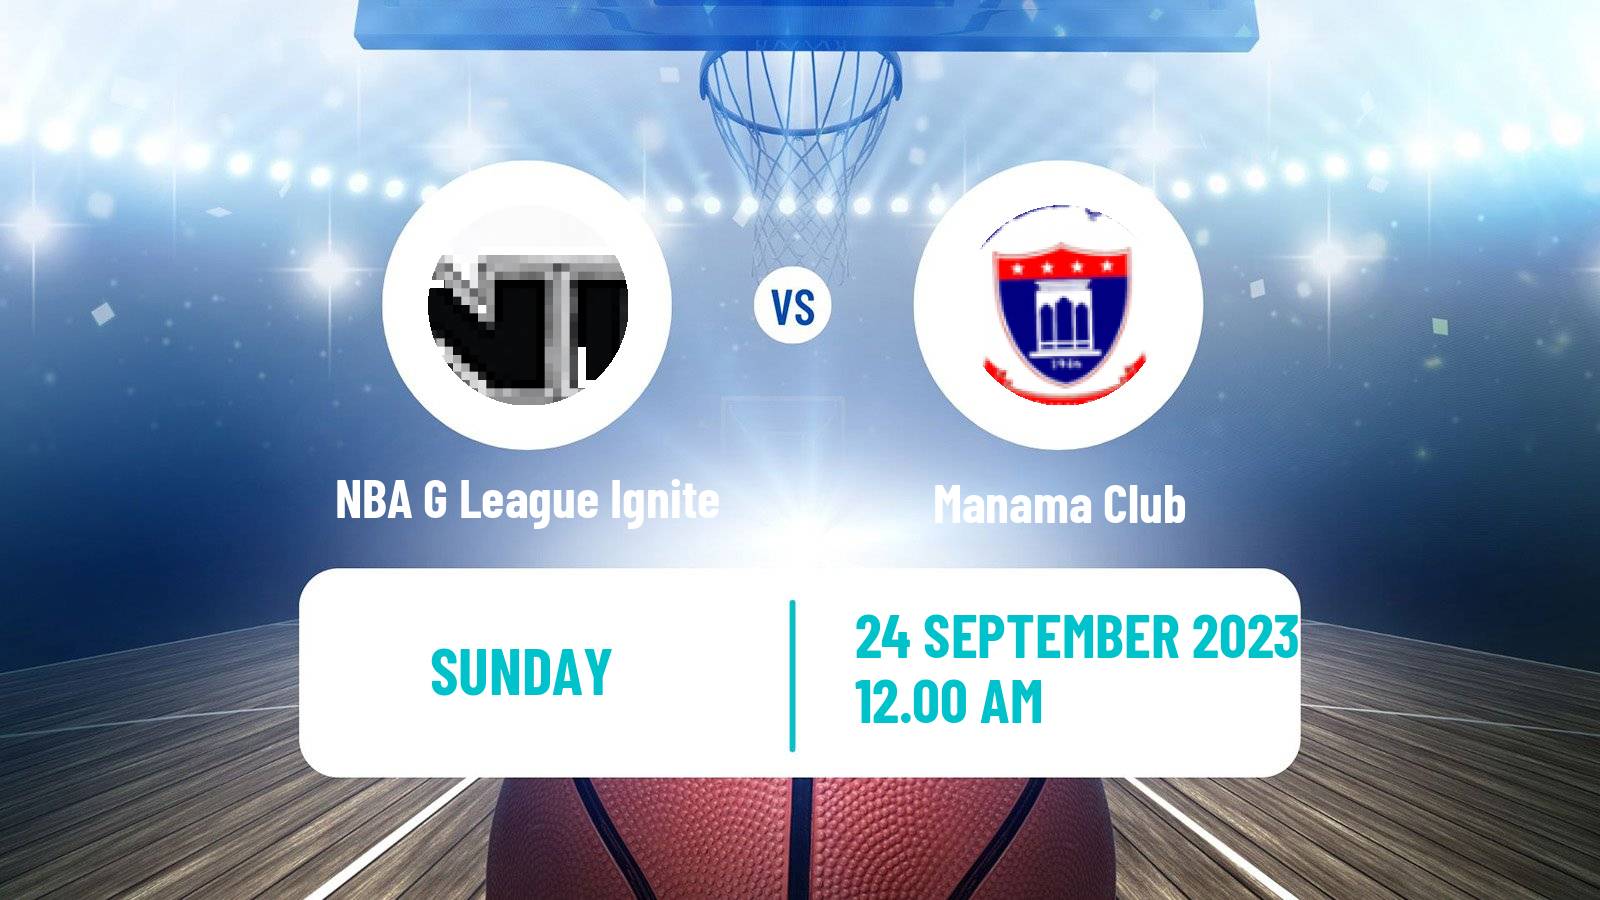 Basketball Basketball Intercontinental Cup NBA G League Ignite - Manama Club